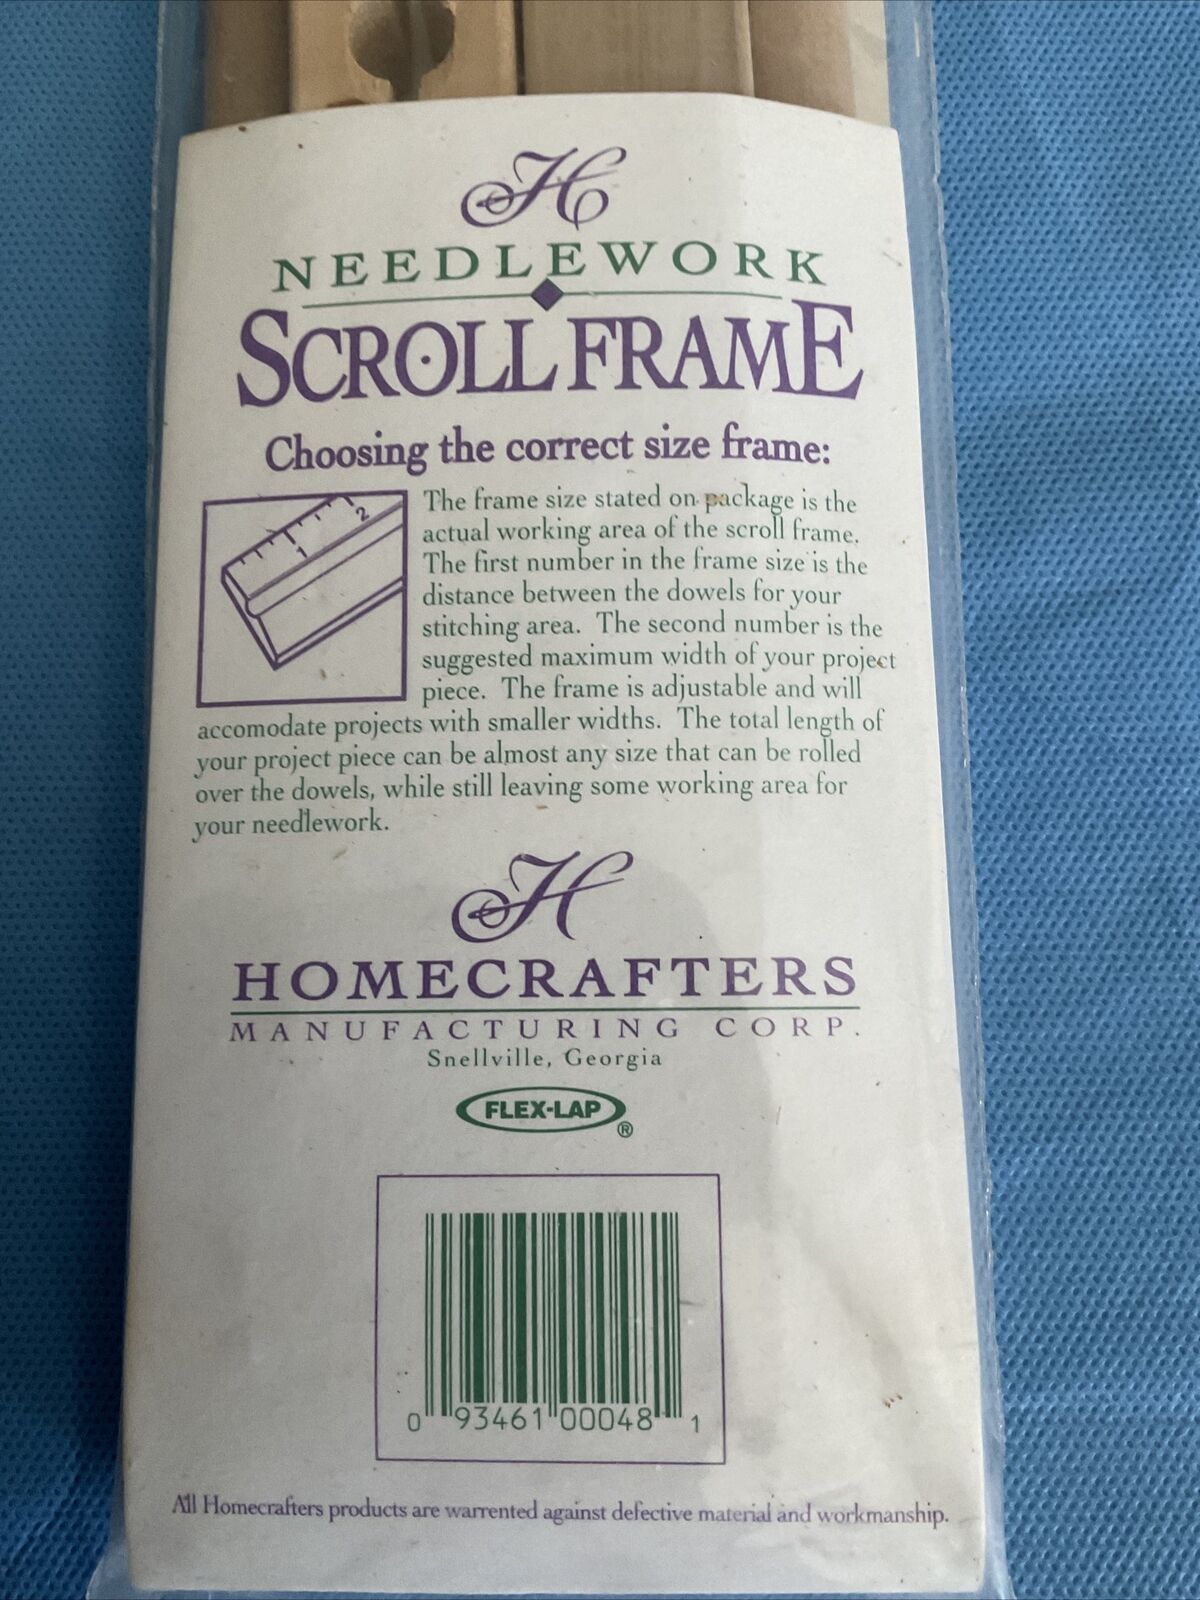 Homecrafters Needlework Scroll Frame 4"x8"